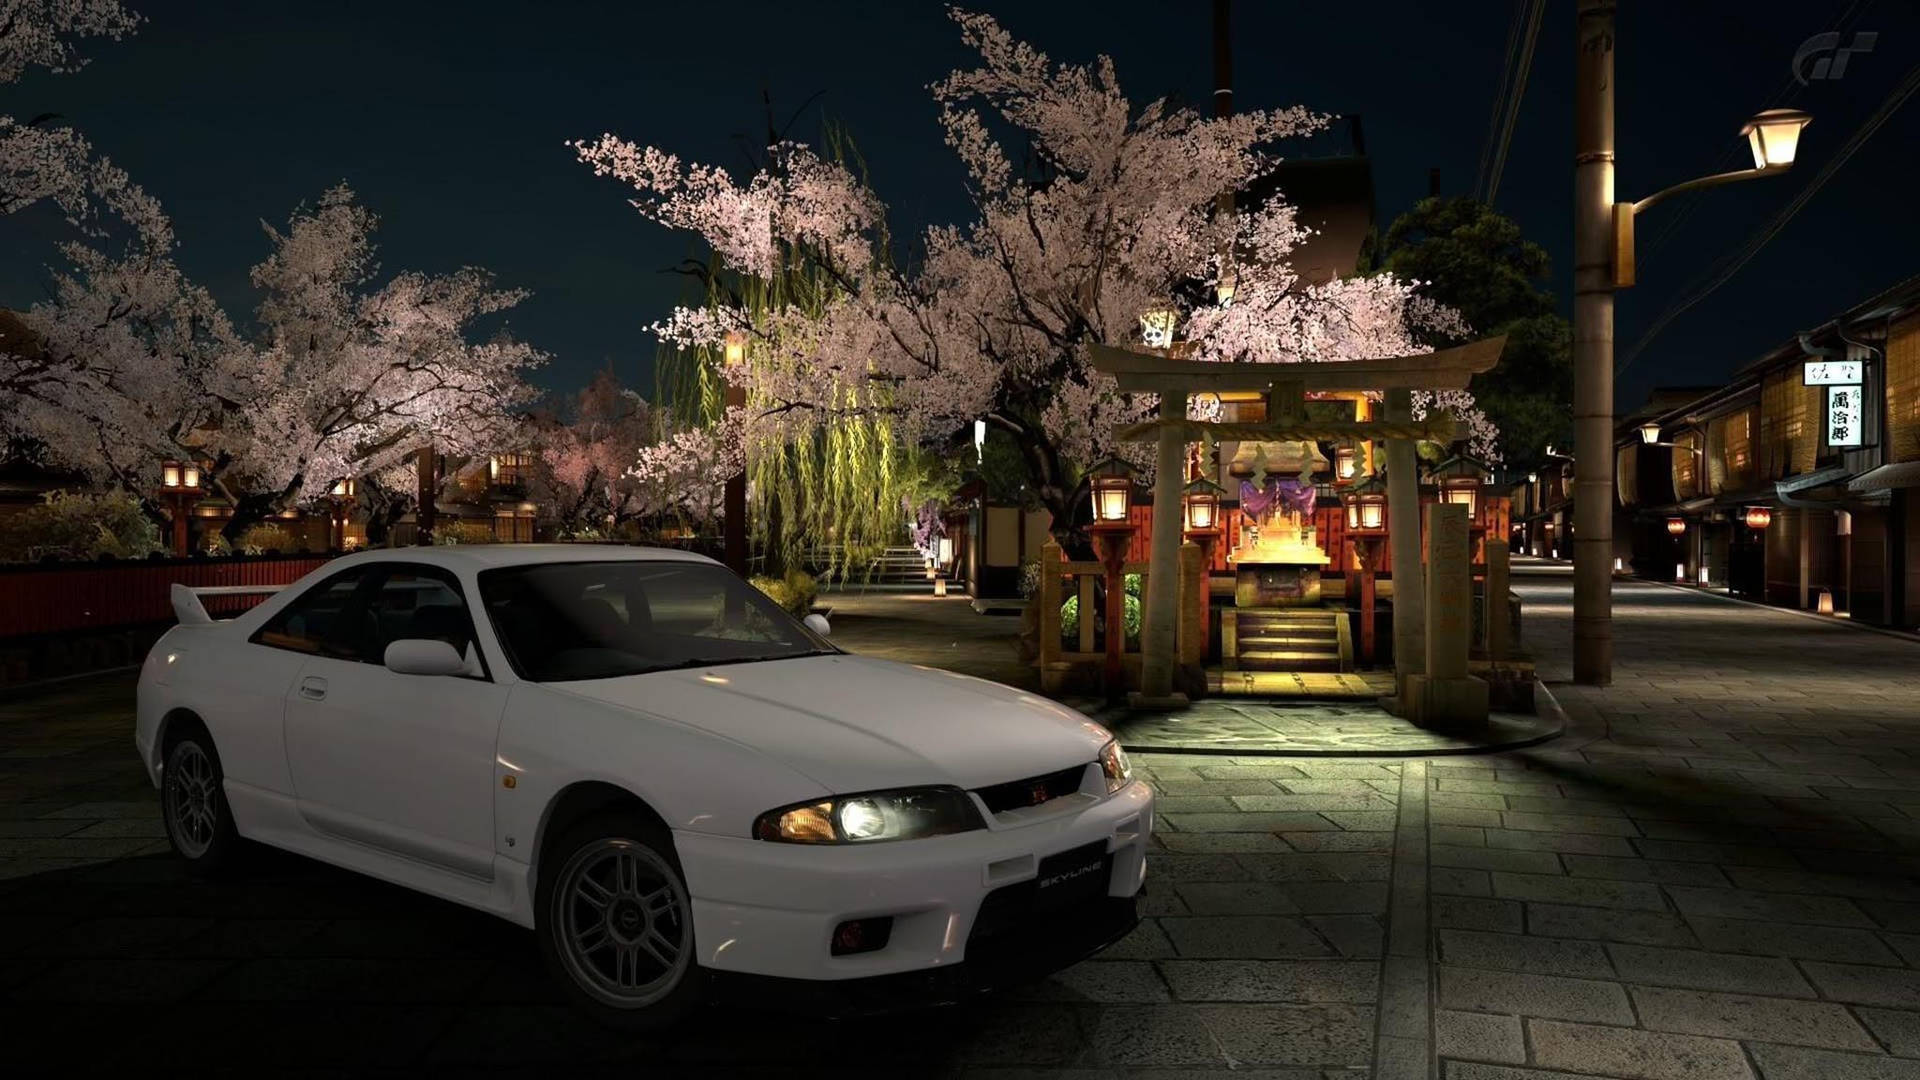 Nissan Skyline Gtr R33 And Cherry Blossoms Wallpaper